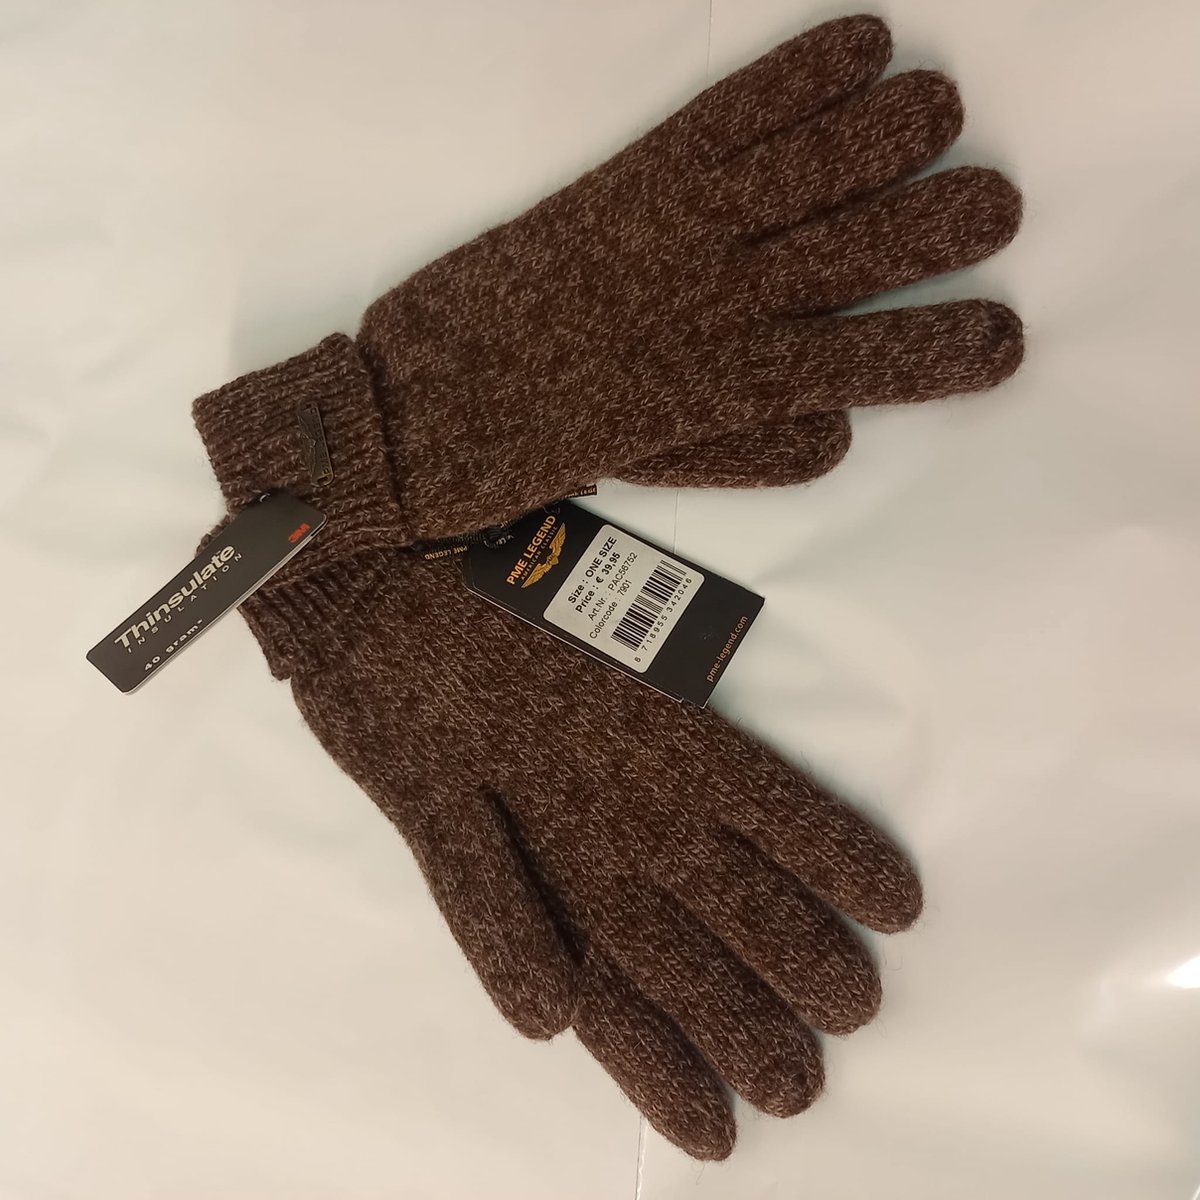 PME LEGEND Handschoenen - Insolution - 40 Gram - Unisex